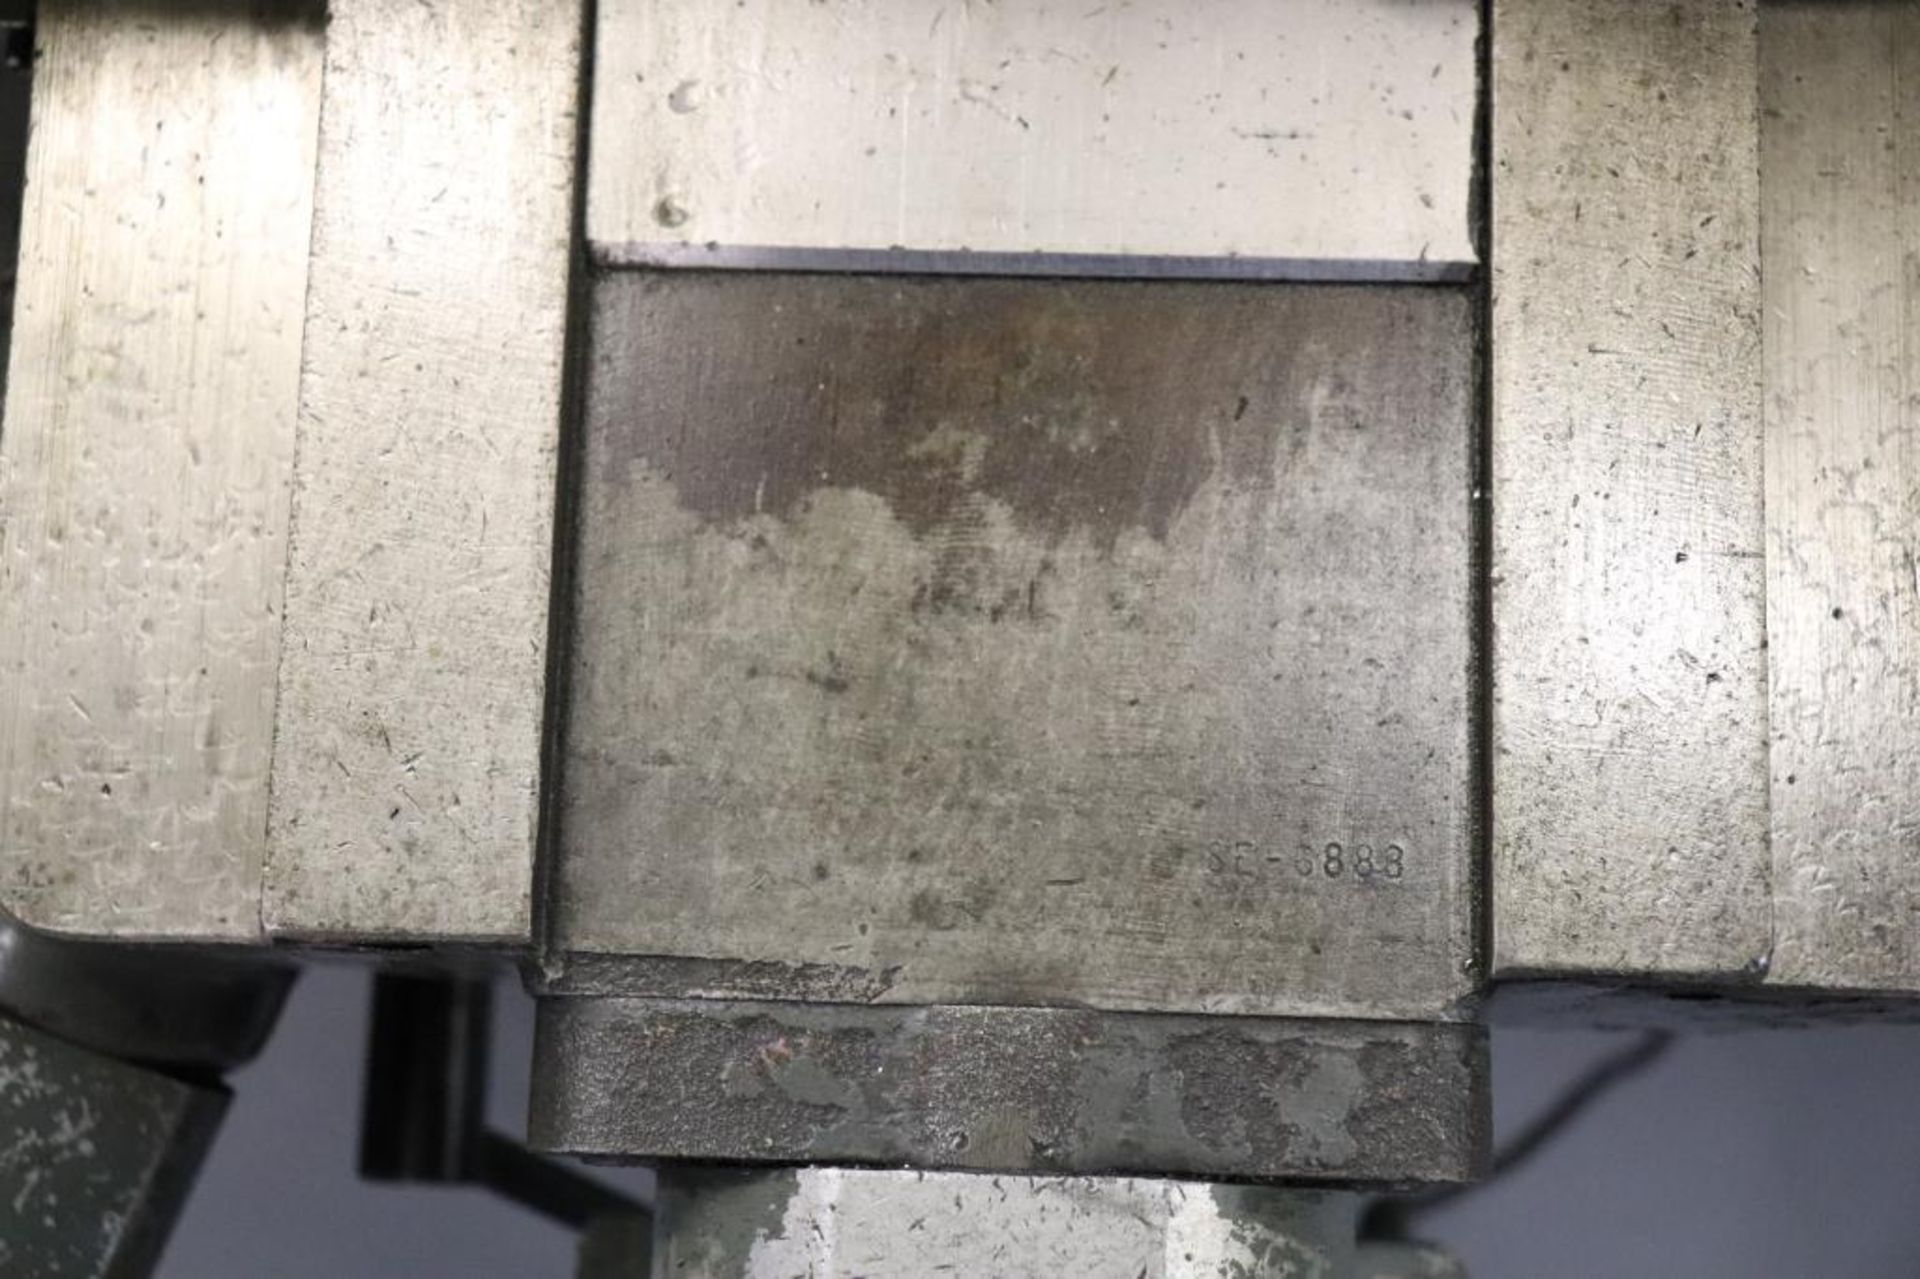 Lagun FT 1 vertical milling machine - Image 11 of 22